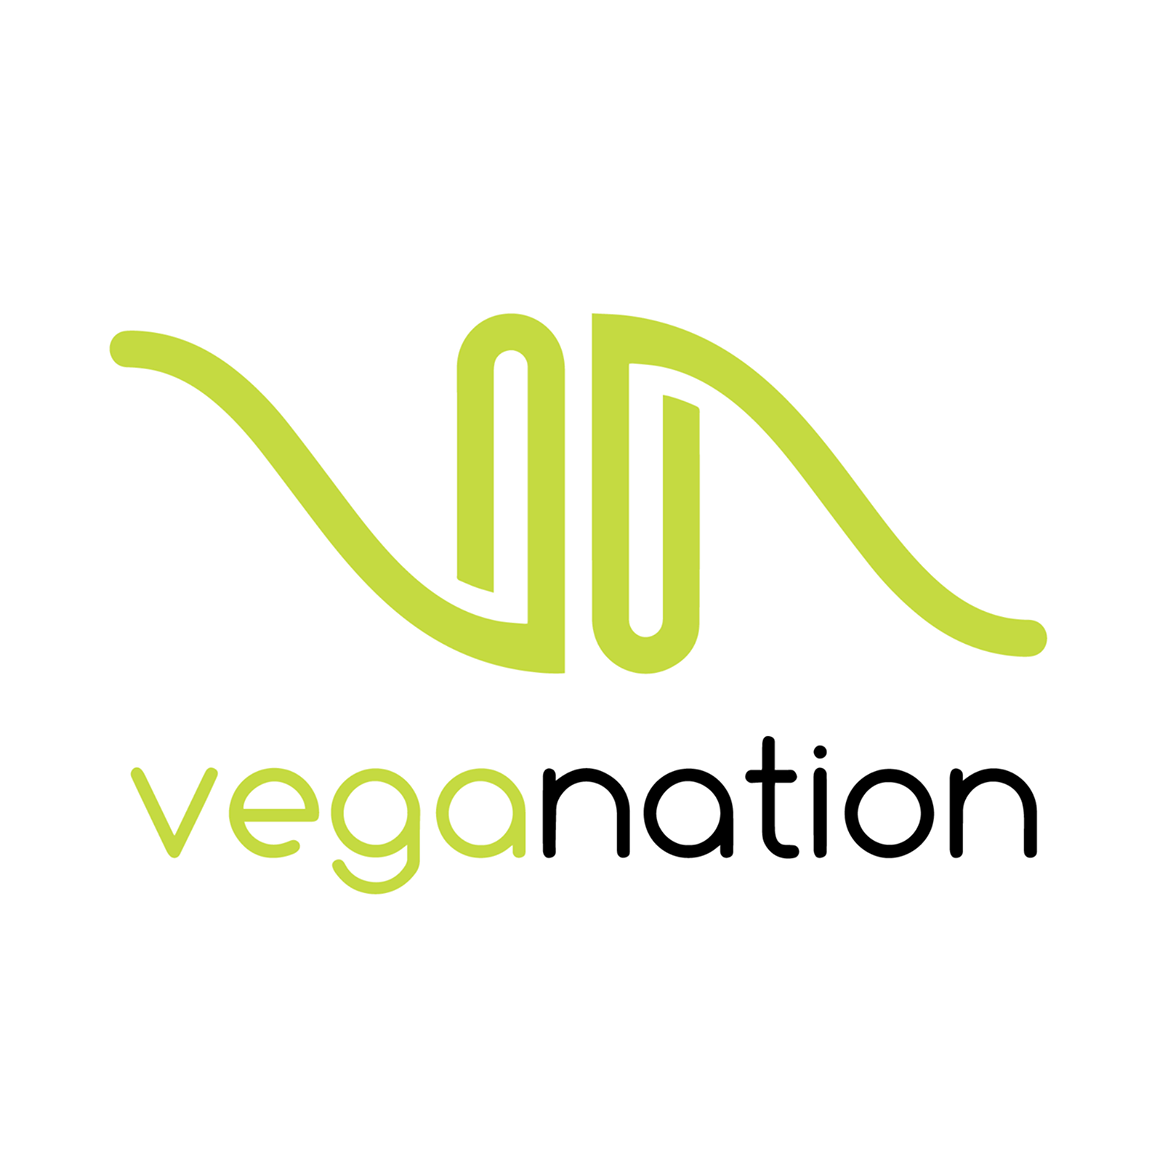 Veganation